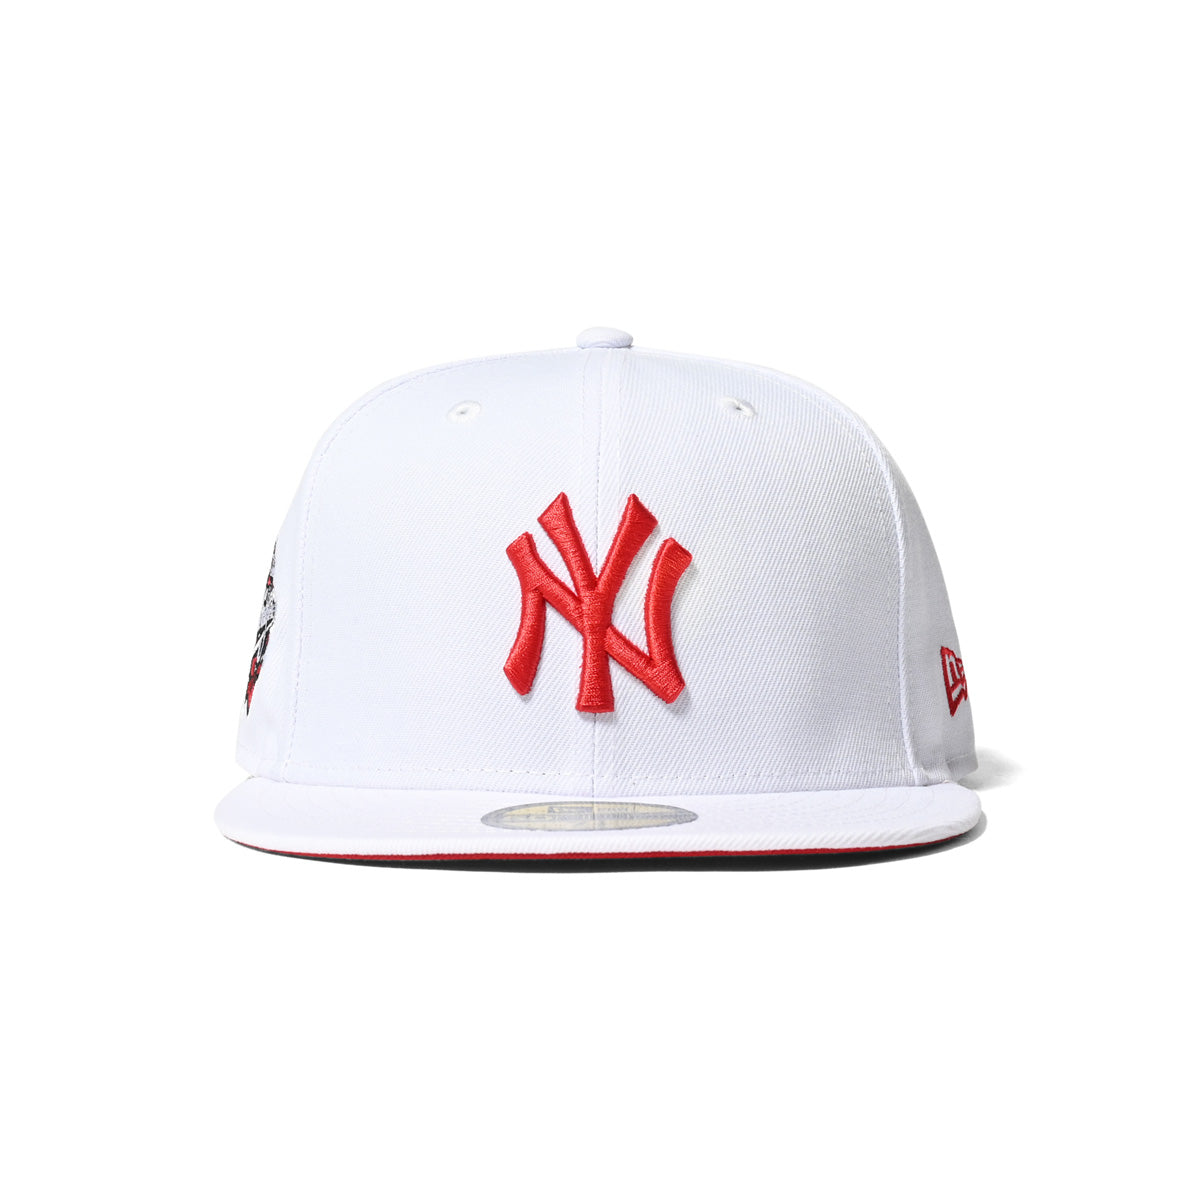 NEW ERA New York Yankees - 59FIFTY WS 1999 WHITE/RED